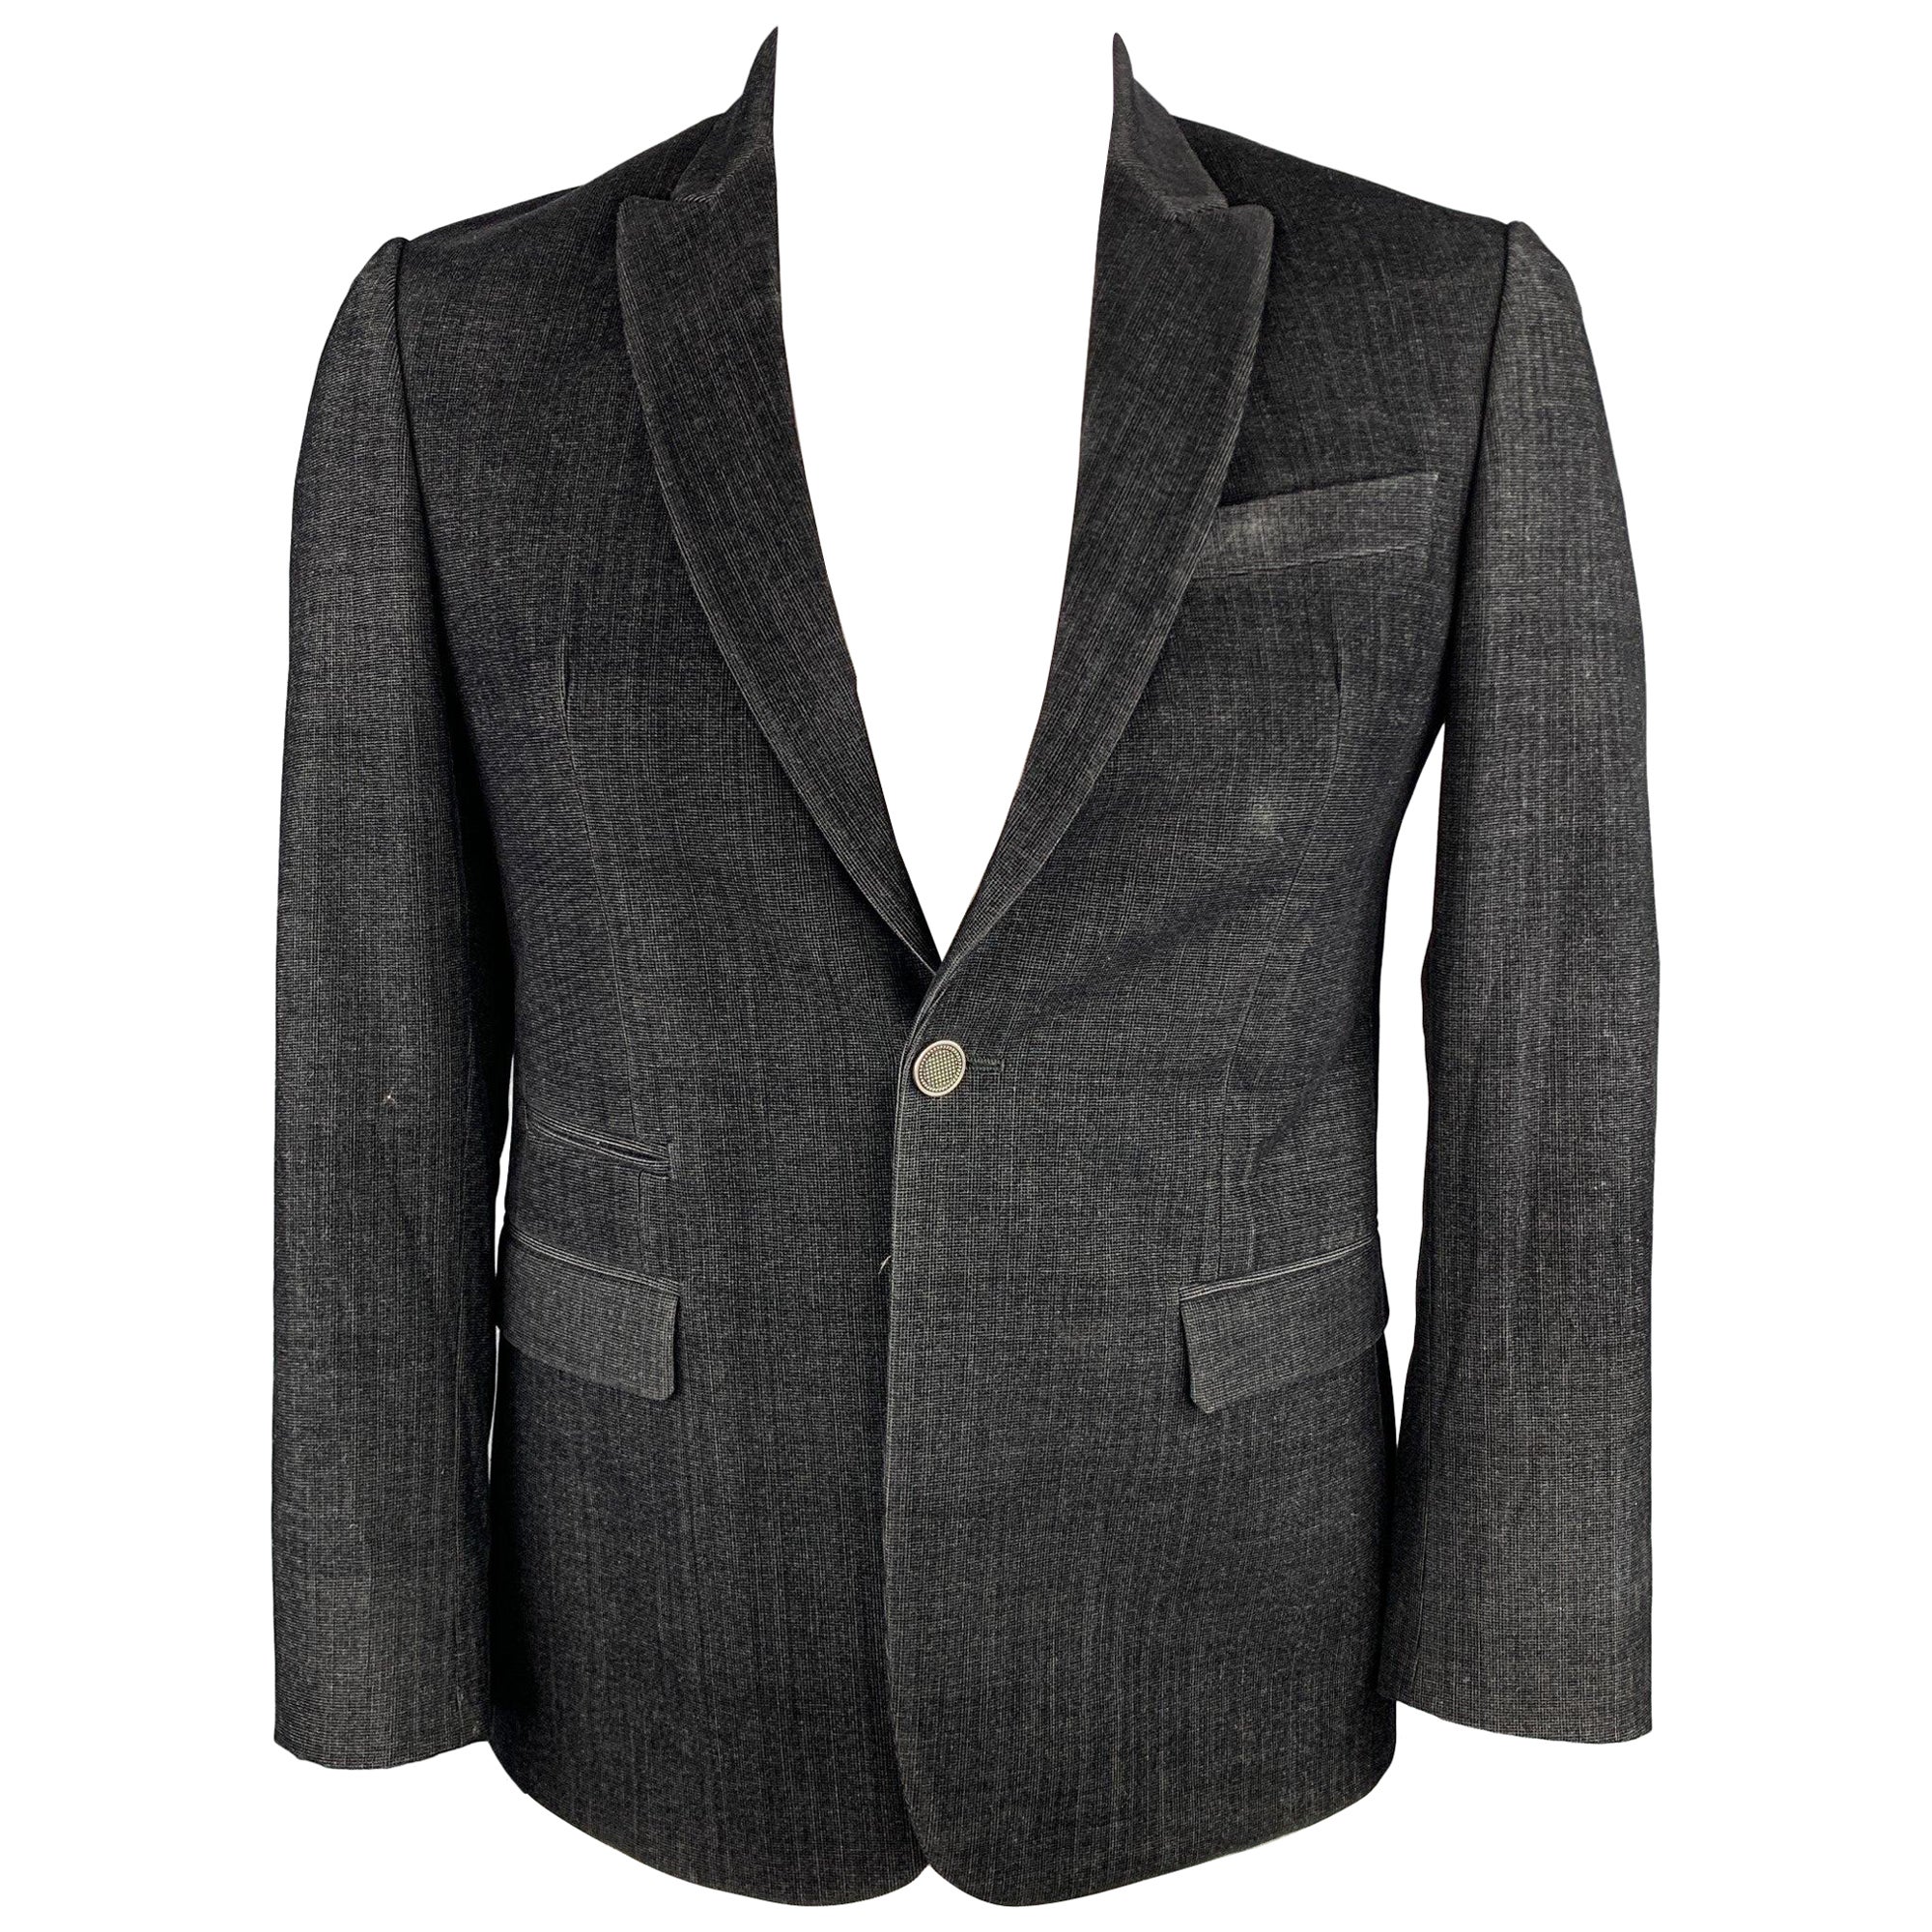 JUST CAVALLI Size 40 Black Textured Polyester Blend Peak Lapel Sport Coat For Sale